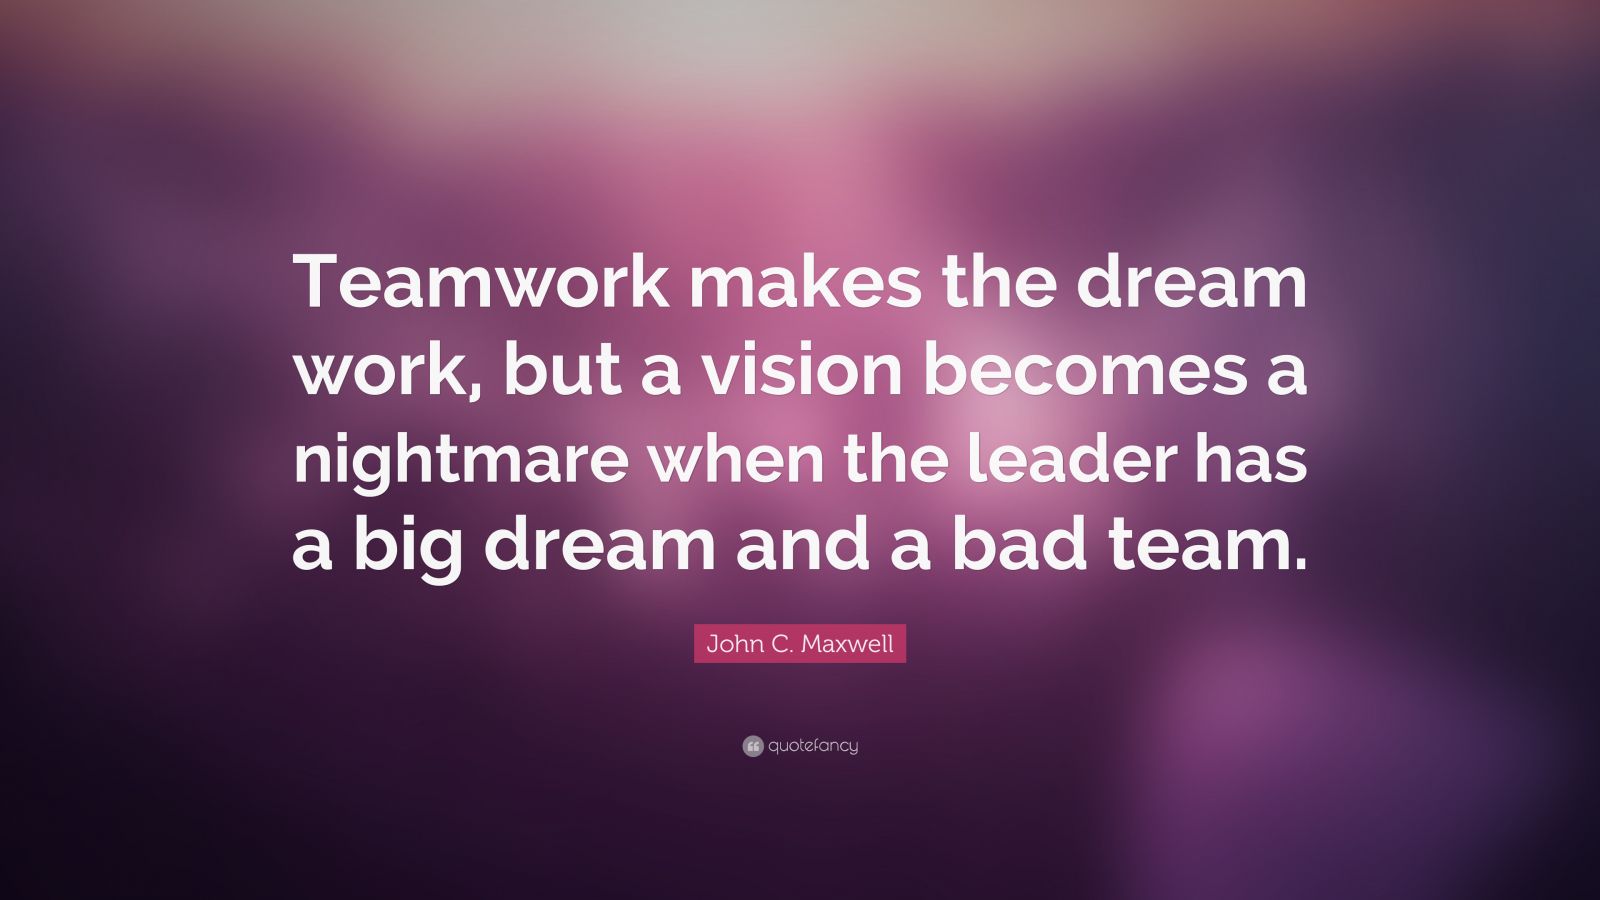 John C. Maxwell Quote: “Teamwork makes the dream work, but a vision